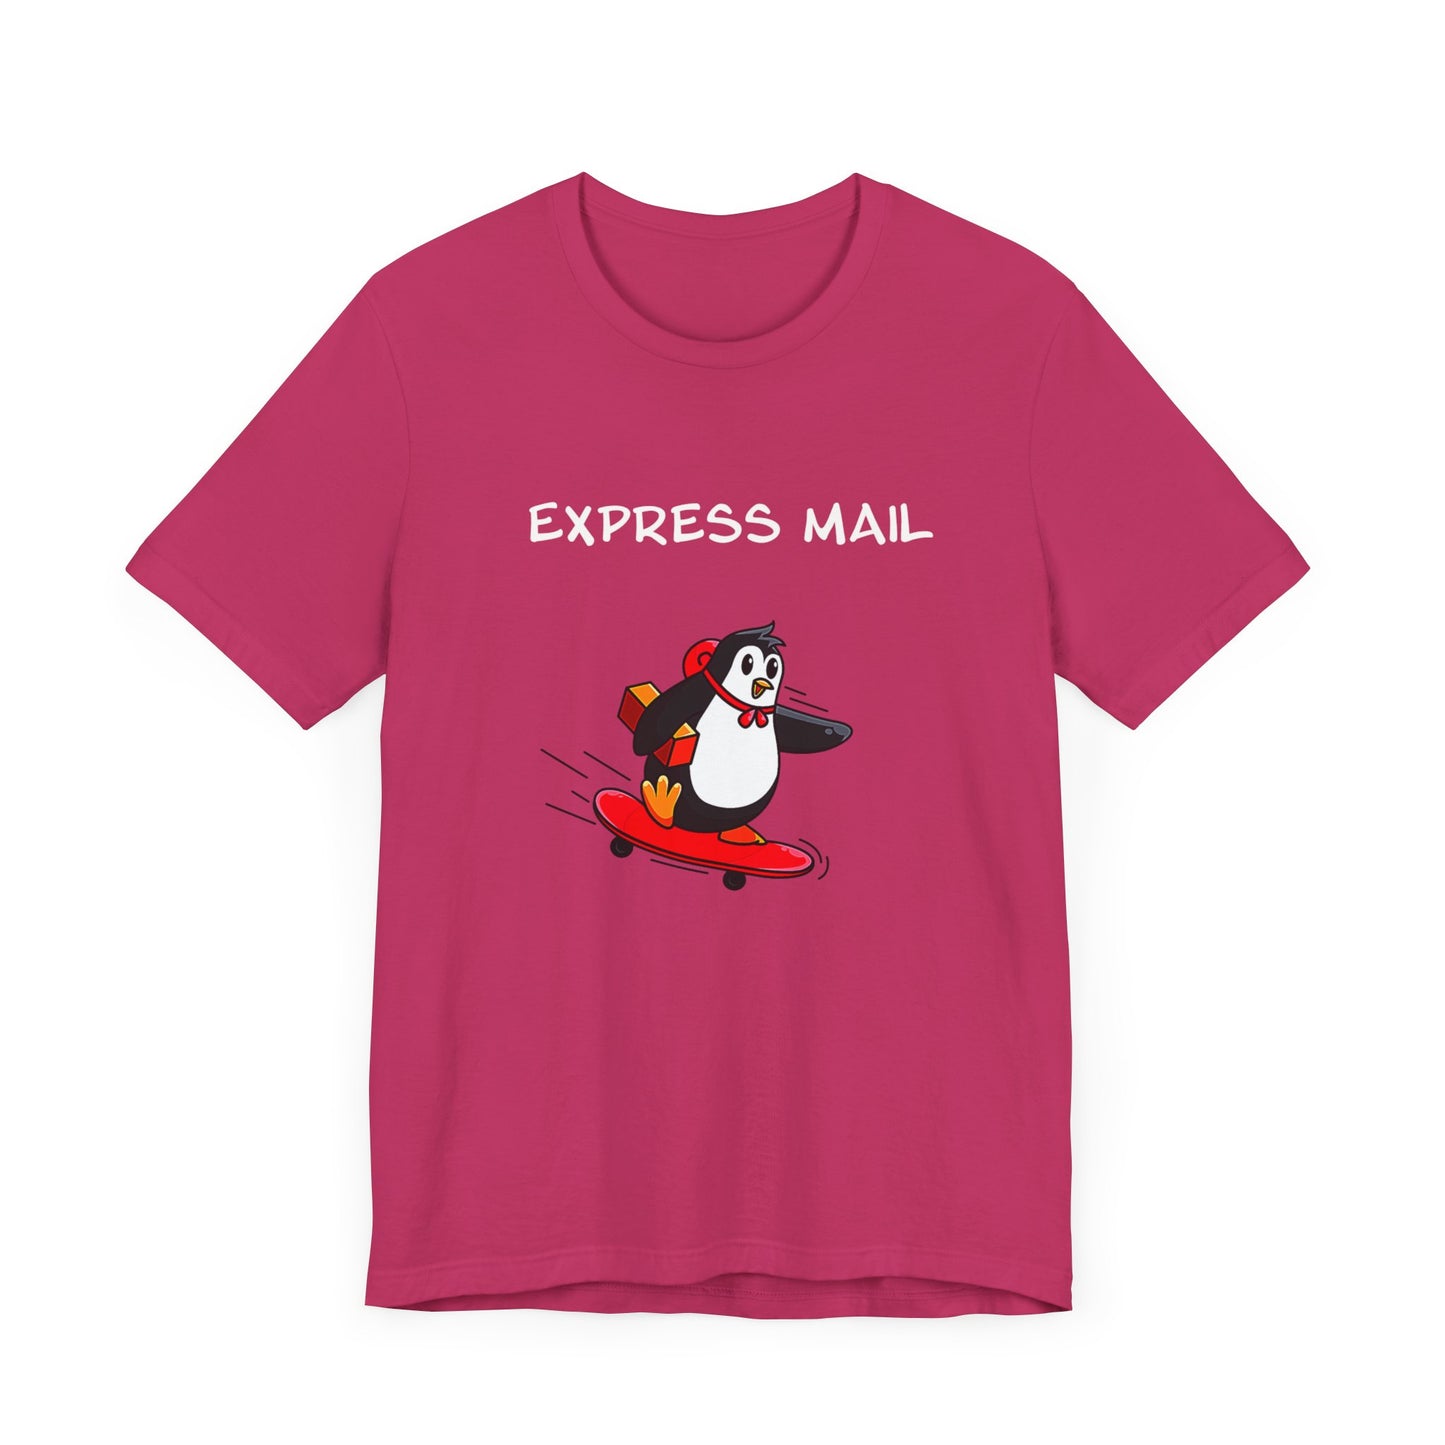 Express Mail. Unisex Jersey Short Sleeve Tee